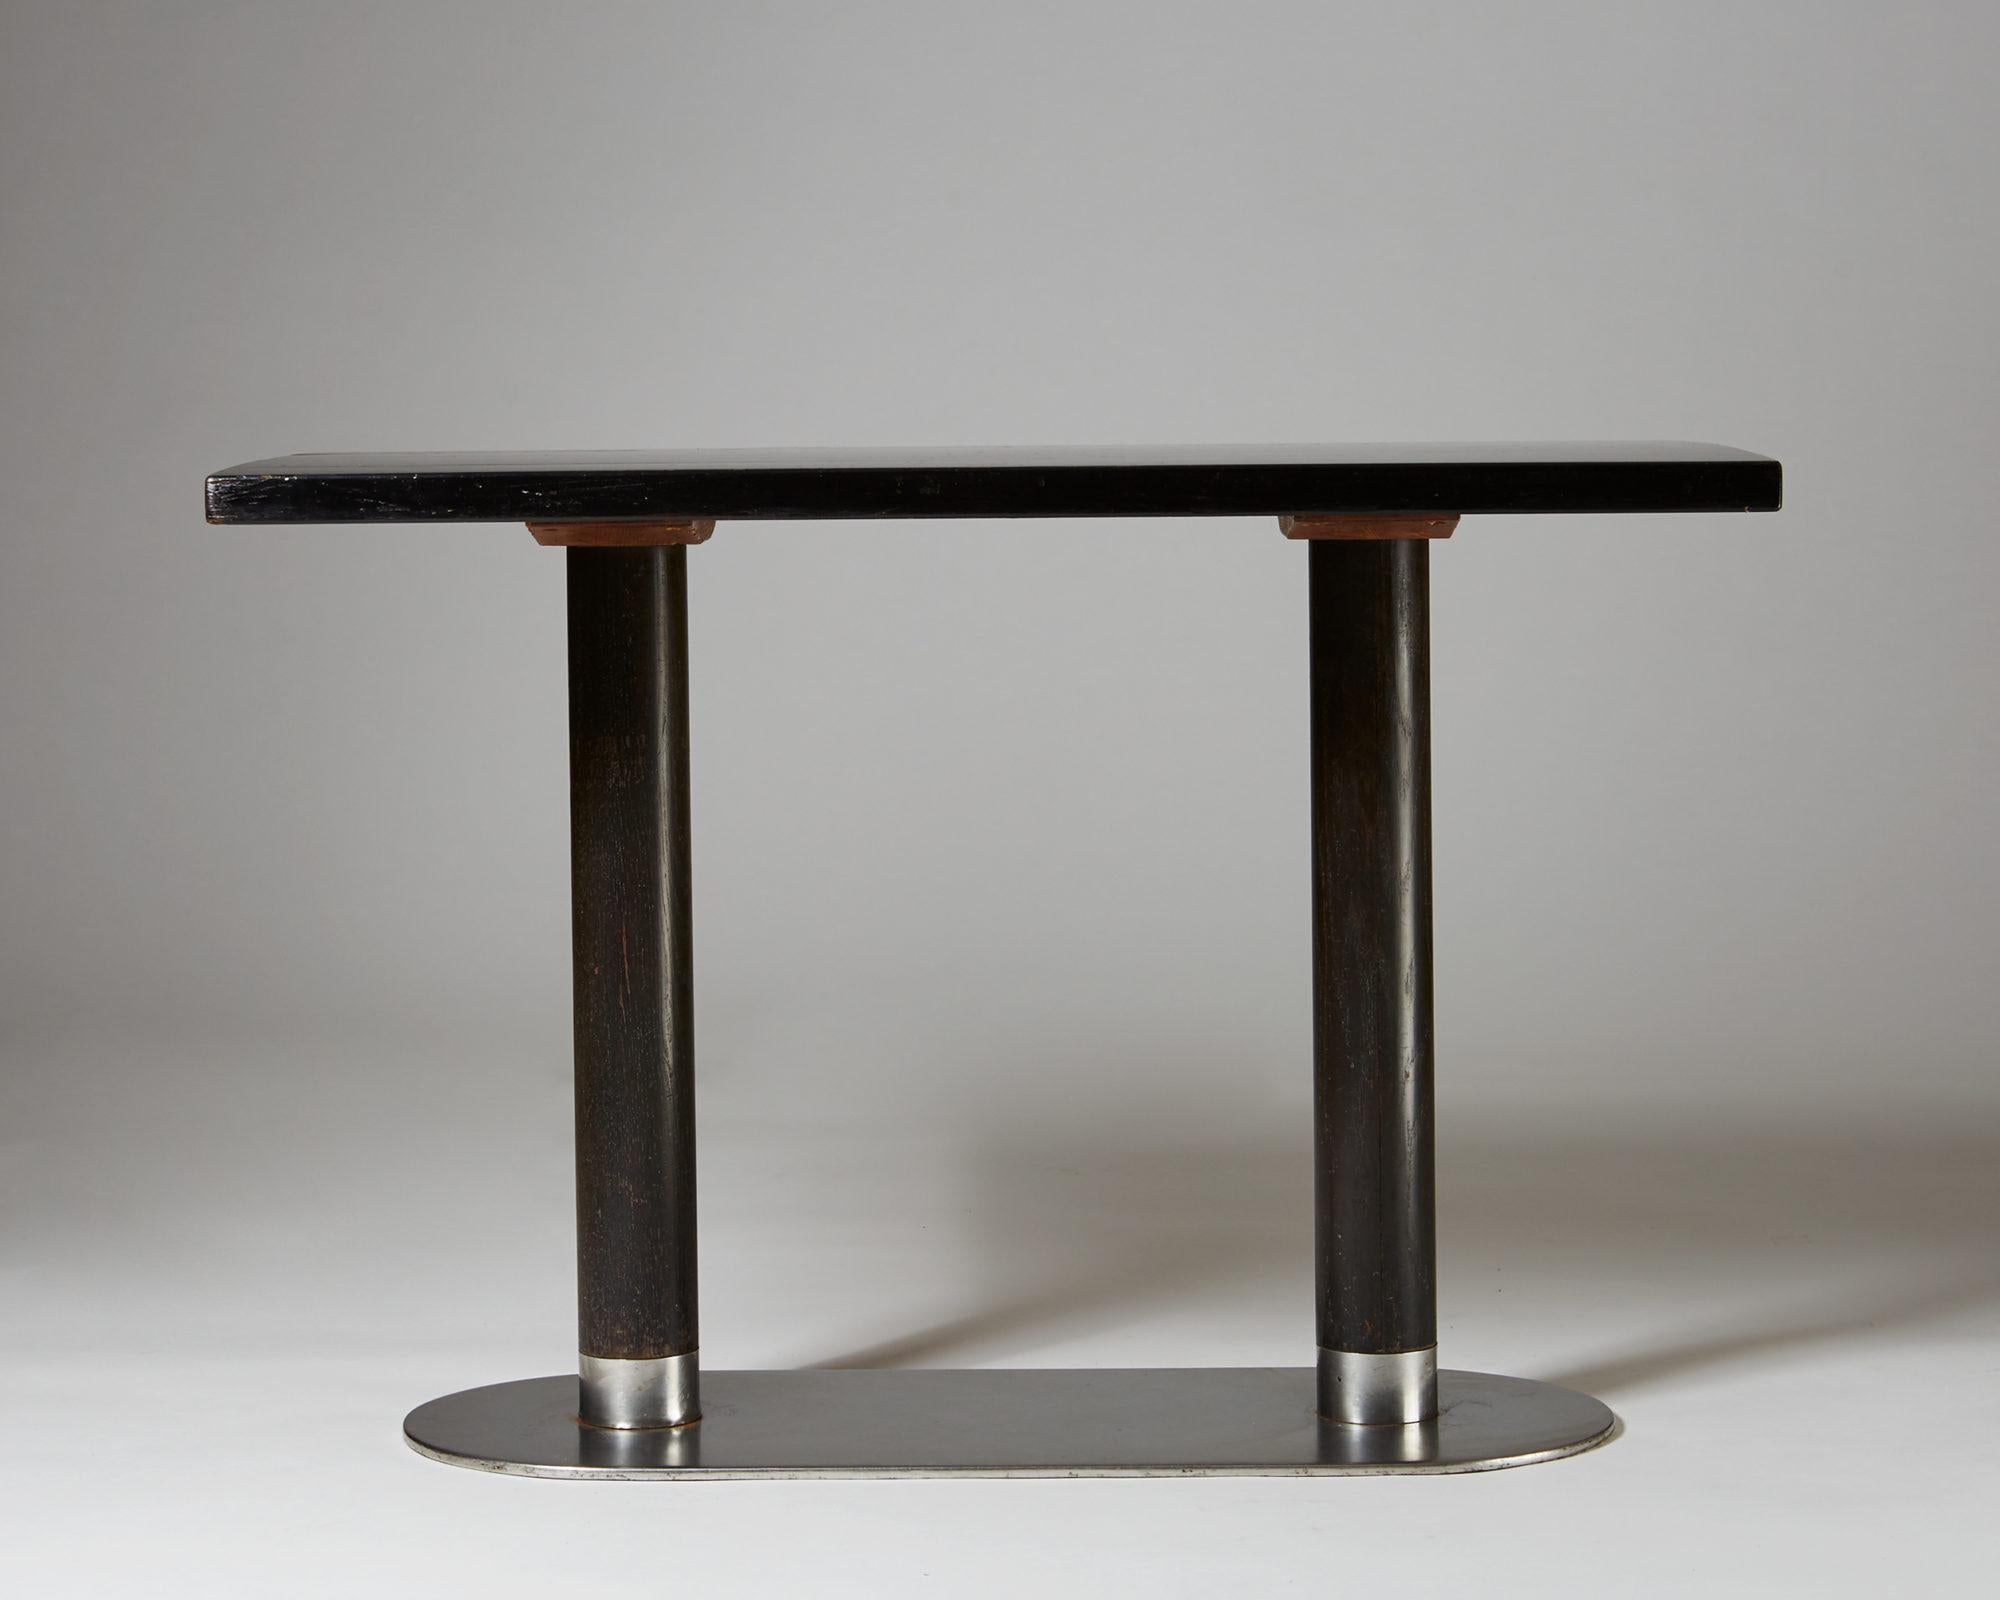 Swedish Table ‘Typenko’ Designed by Axel Einar Hjorth for Nordiska Kompaniet, 1931